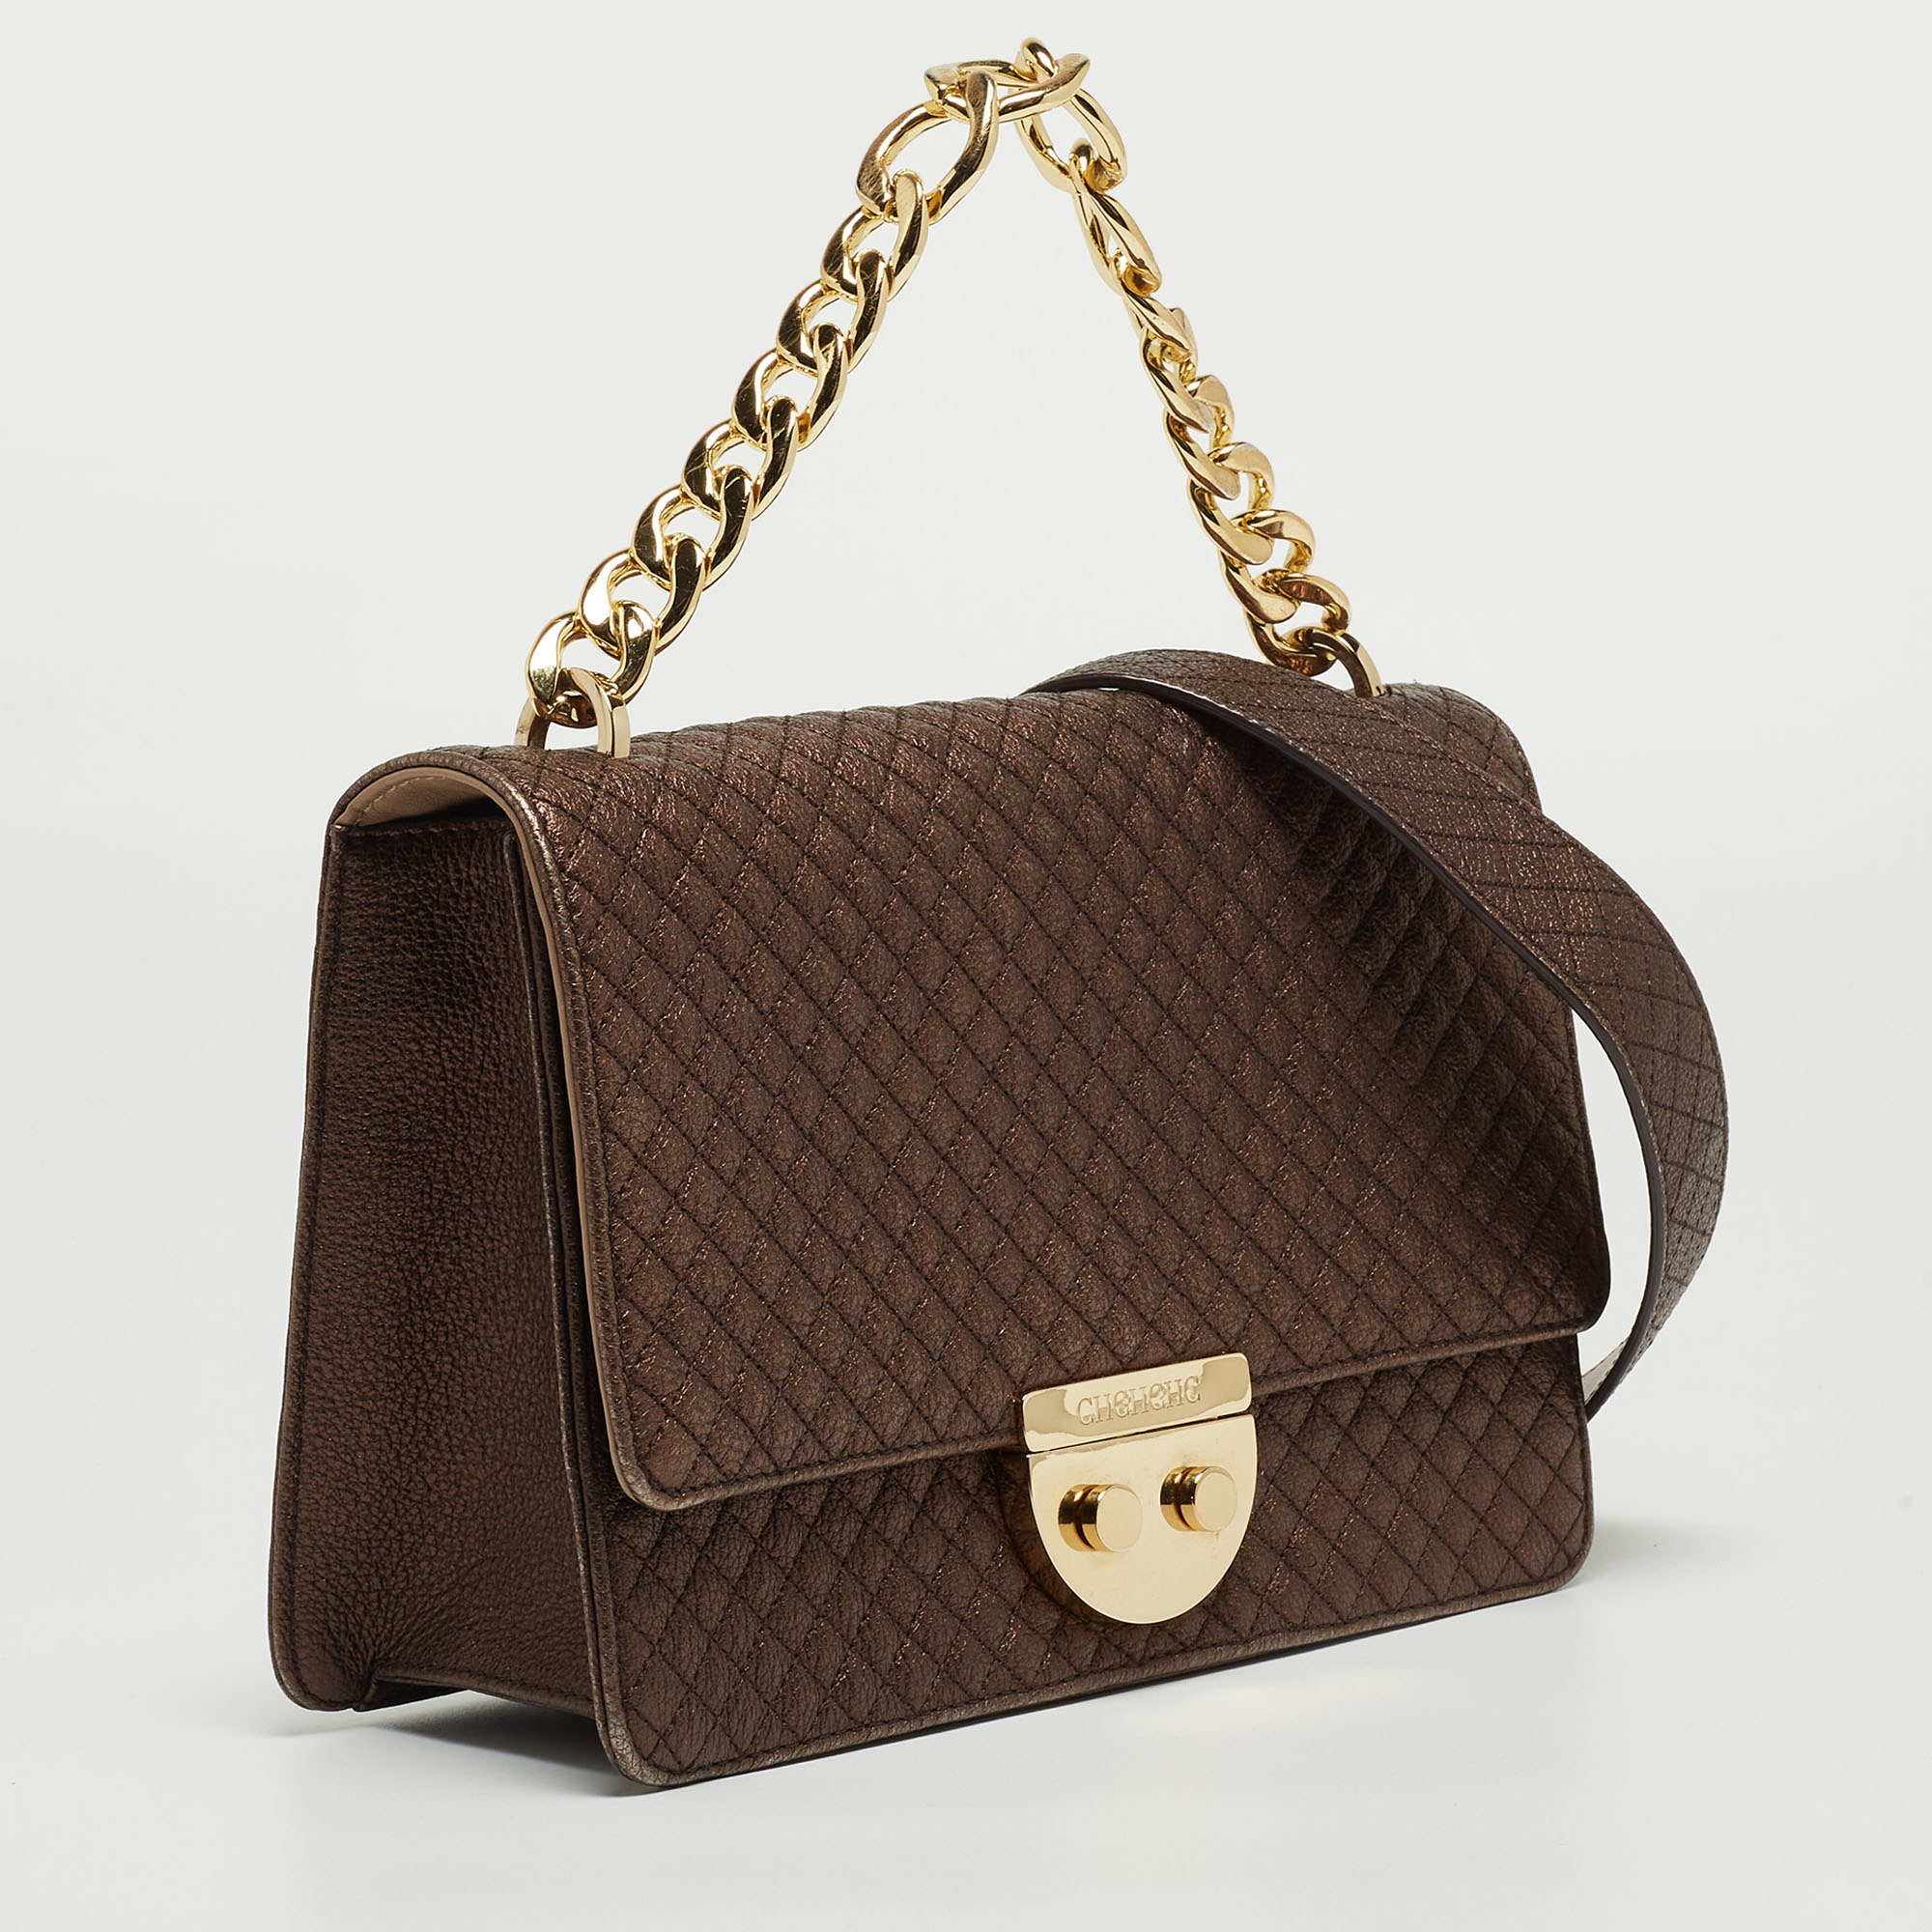 Carolina Herrera Metallic Brown Quilted Leather Chain Detail Top Handle Bag